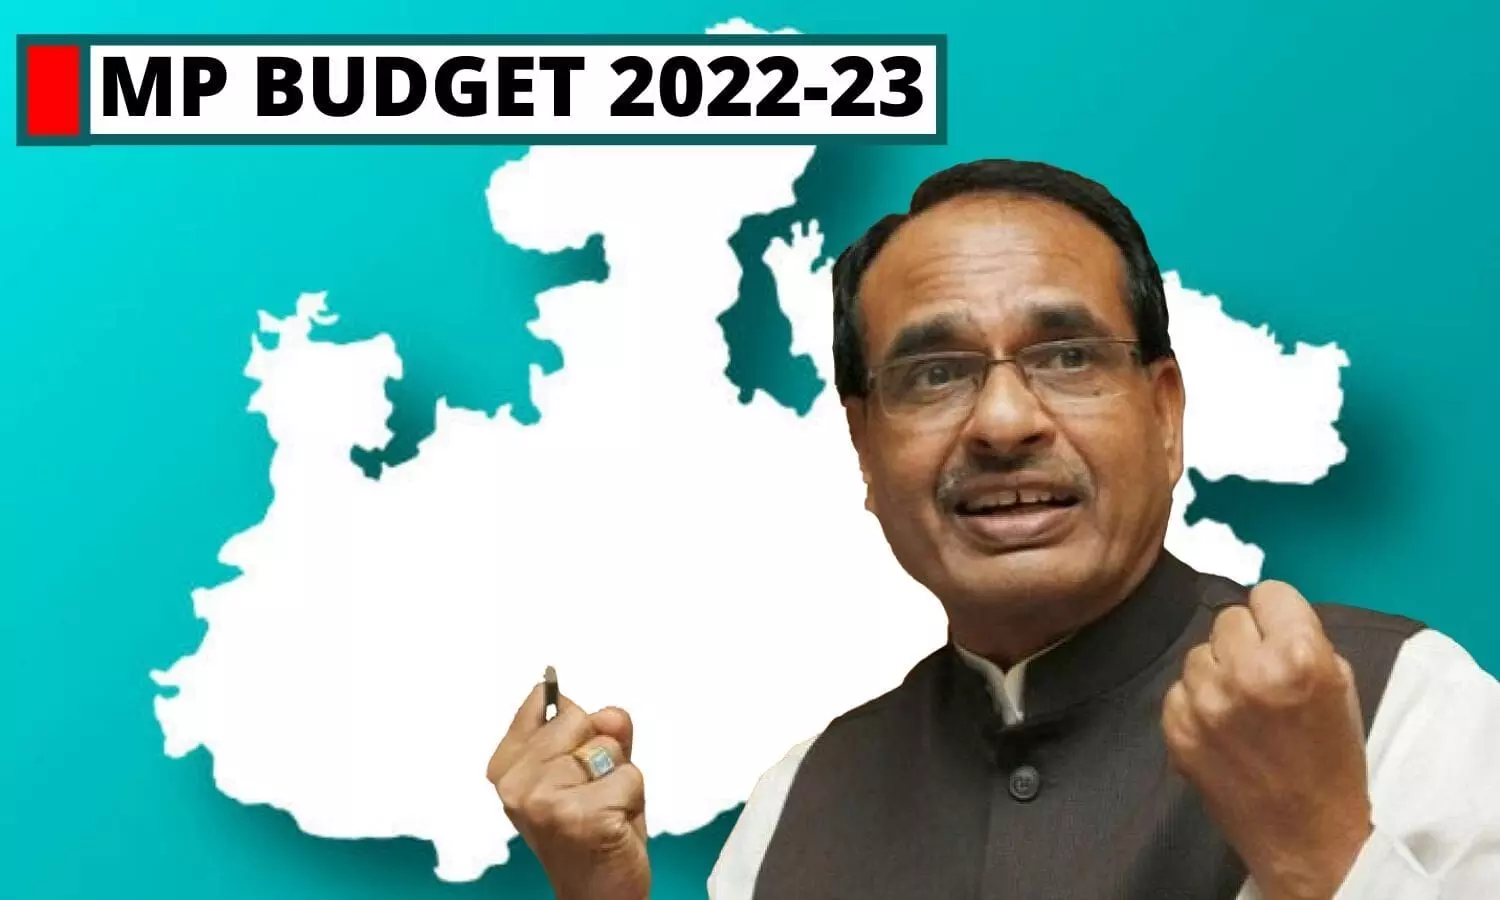 MP Budget 2022-23